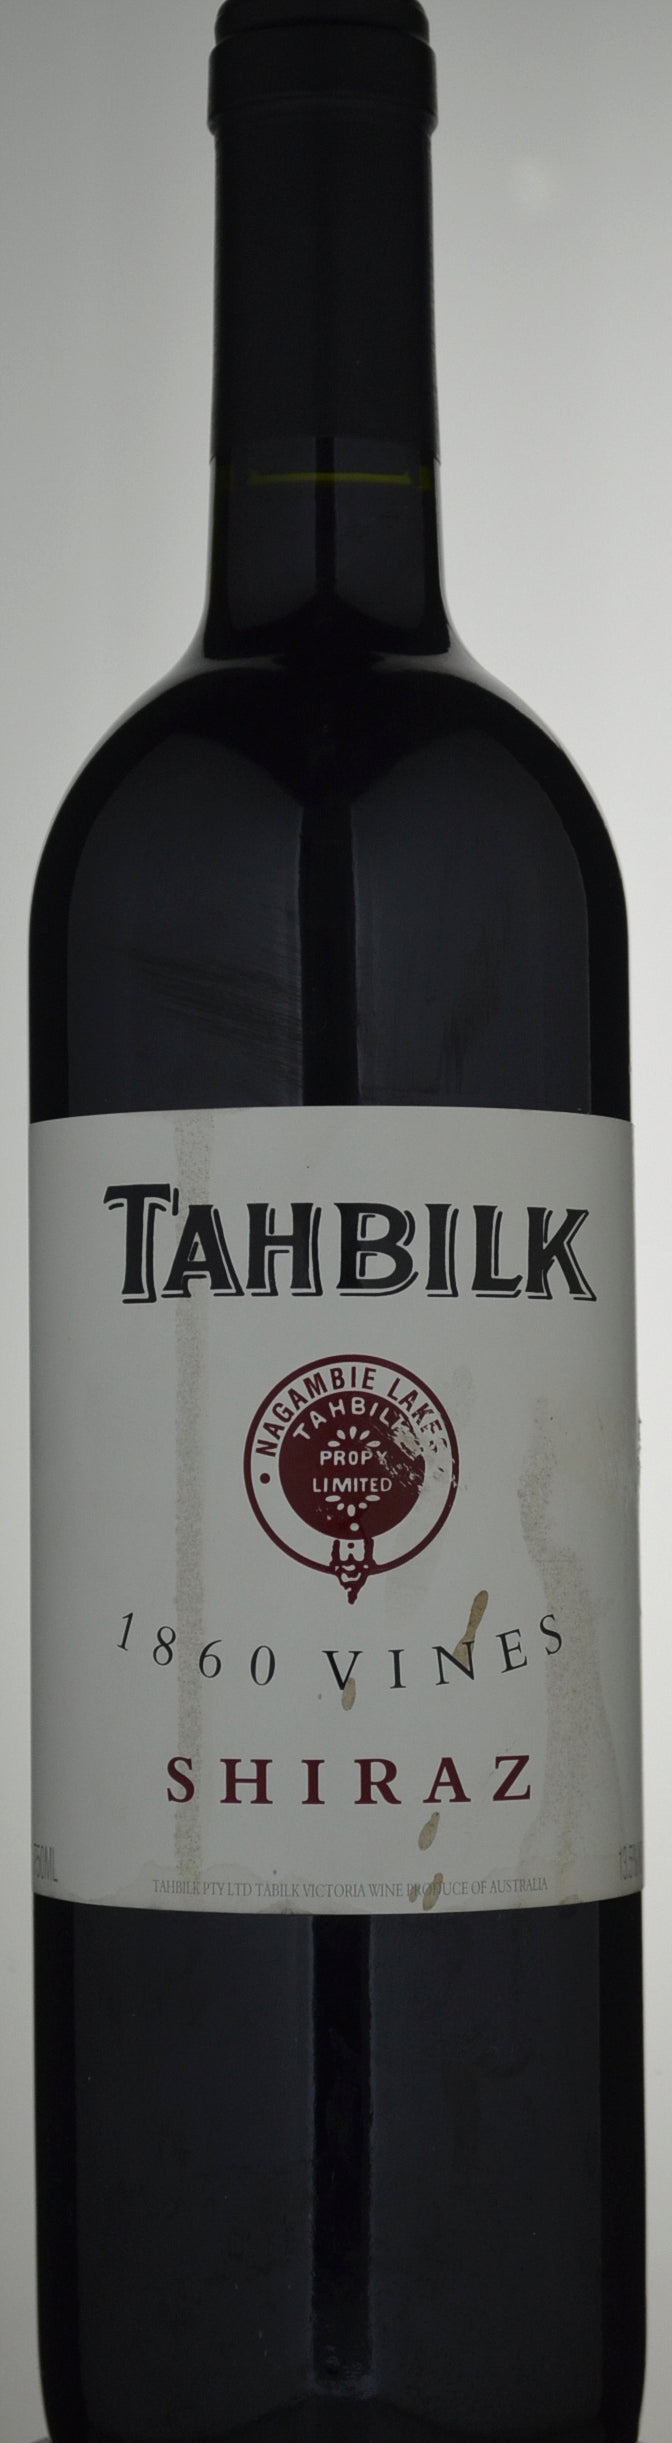 Chateau Tahbilk 1860 Vines Shiraz 1998